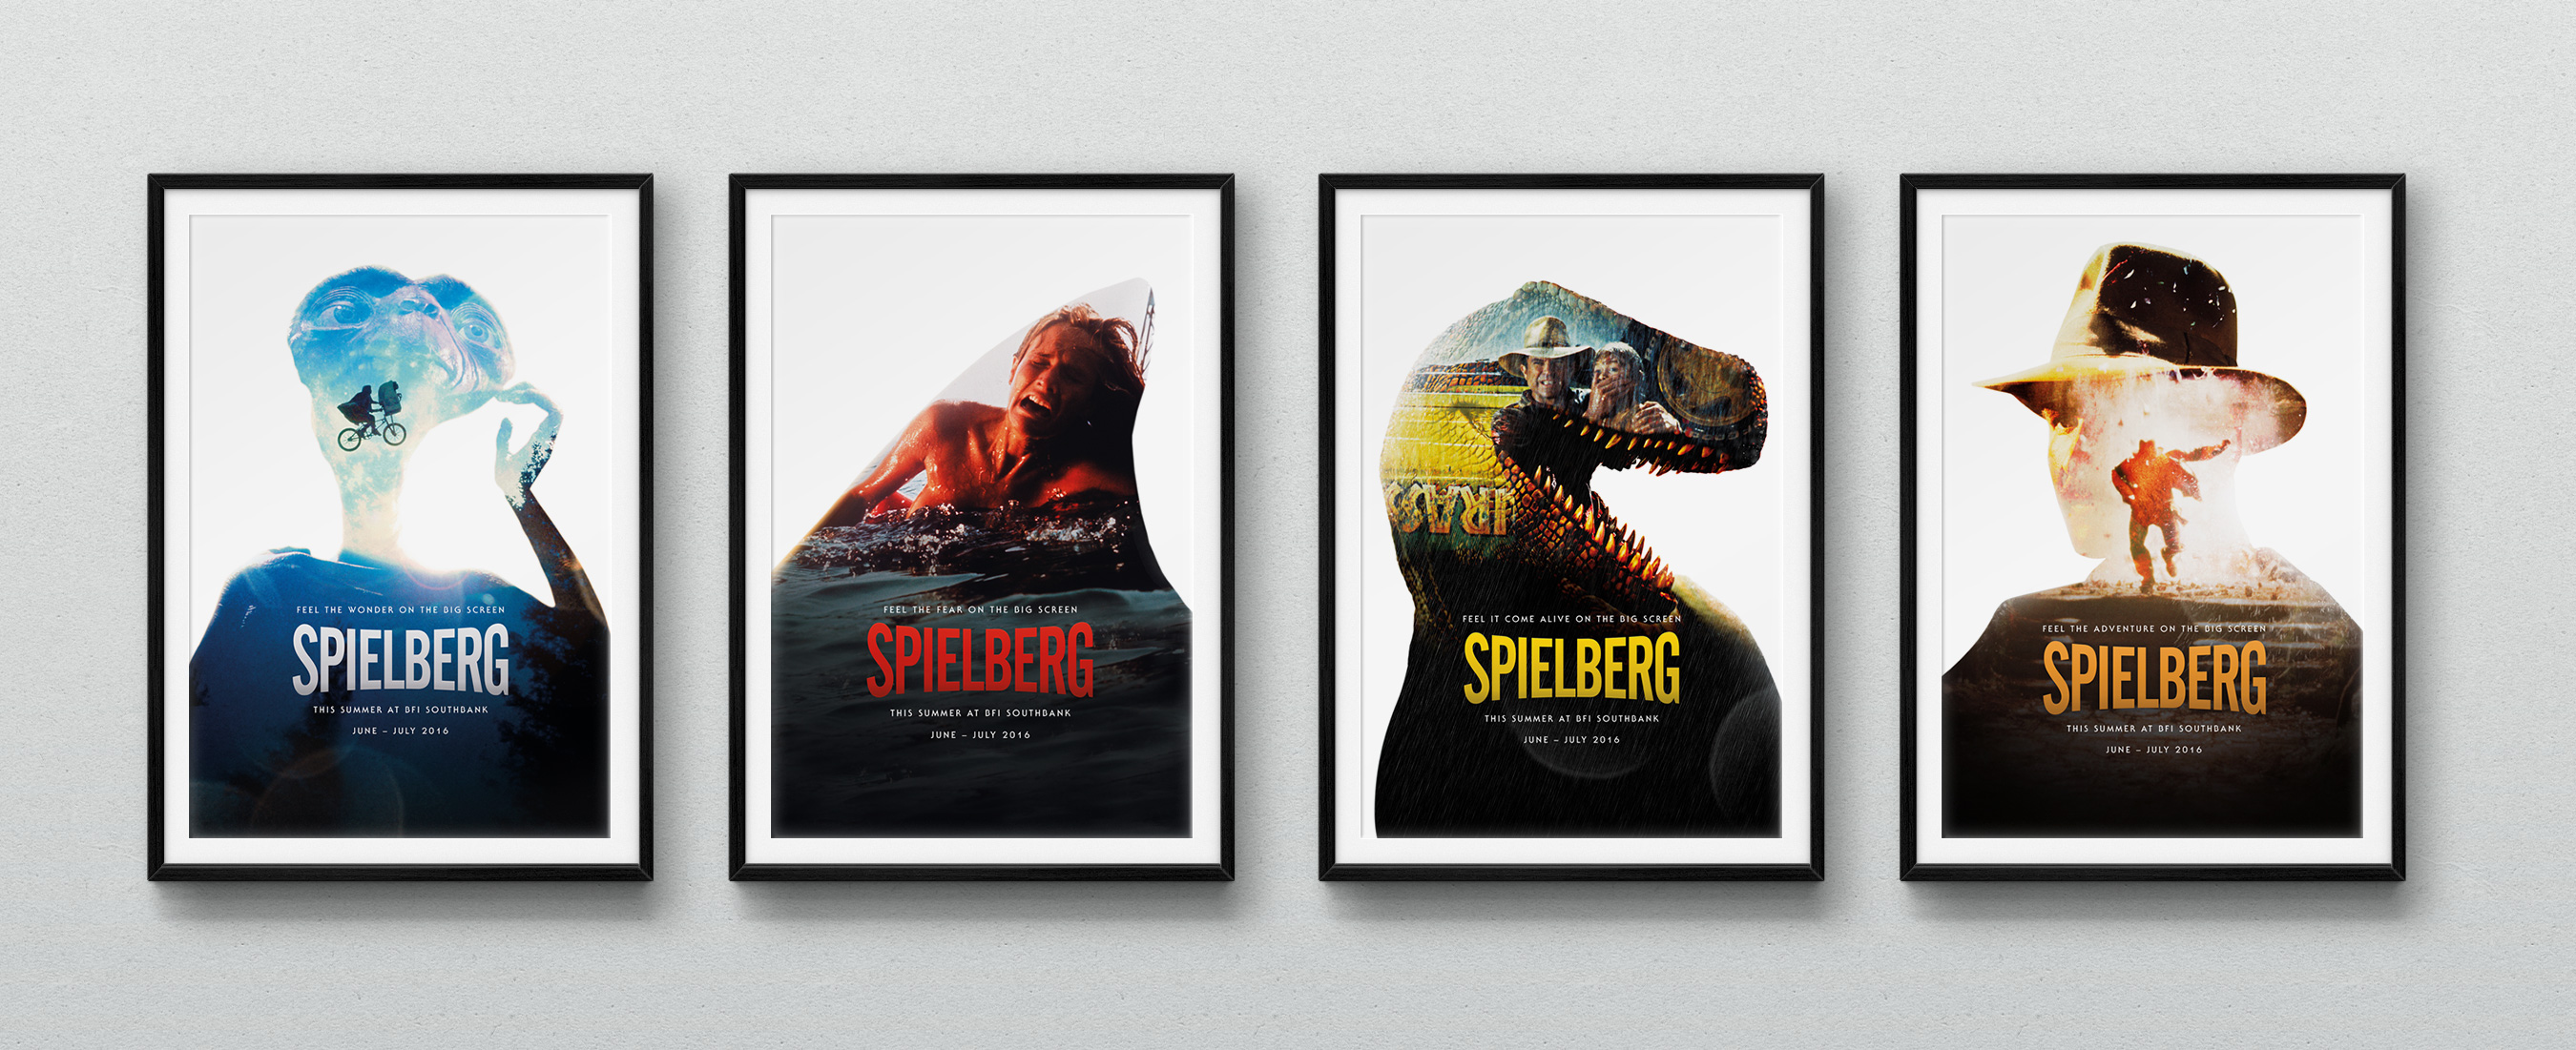 Spielberg-Frames